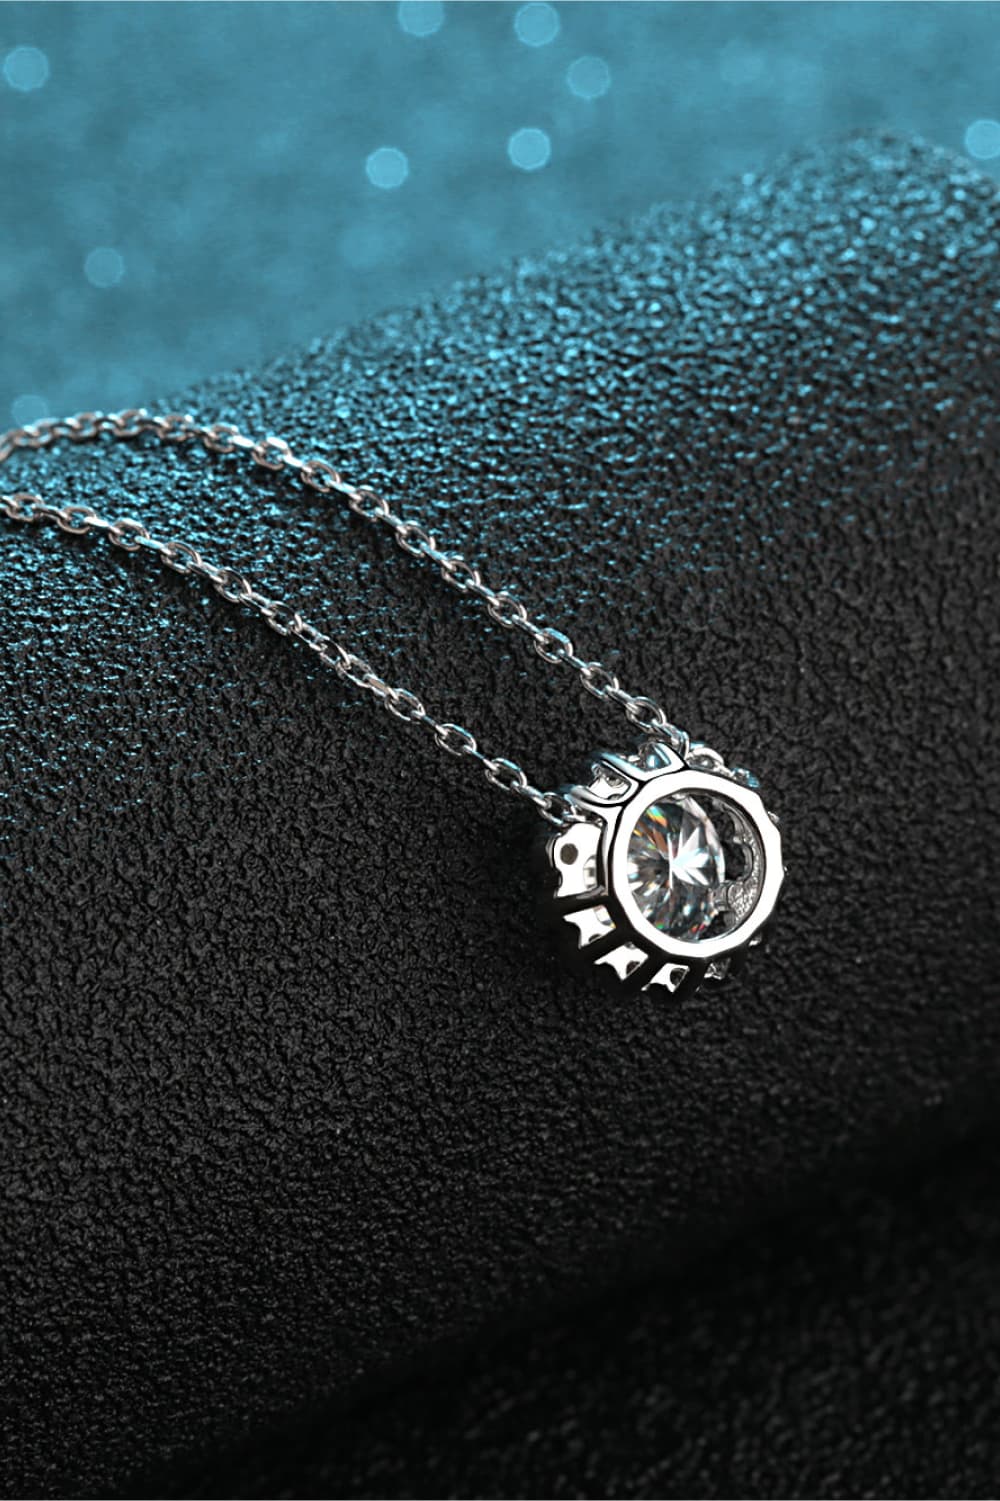 3 Carat Moissanite 925 Sterling Silver Necklace - Tophatter Deals